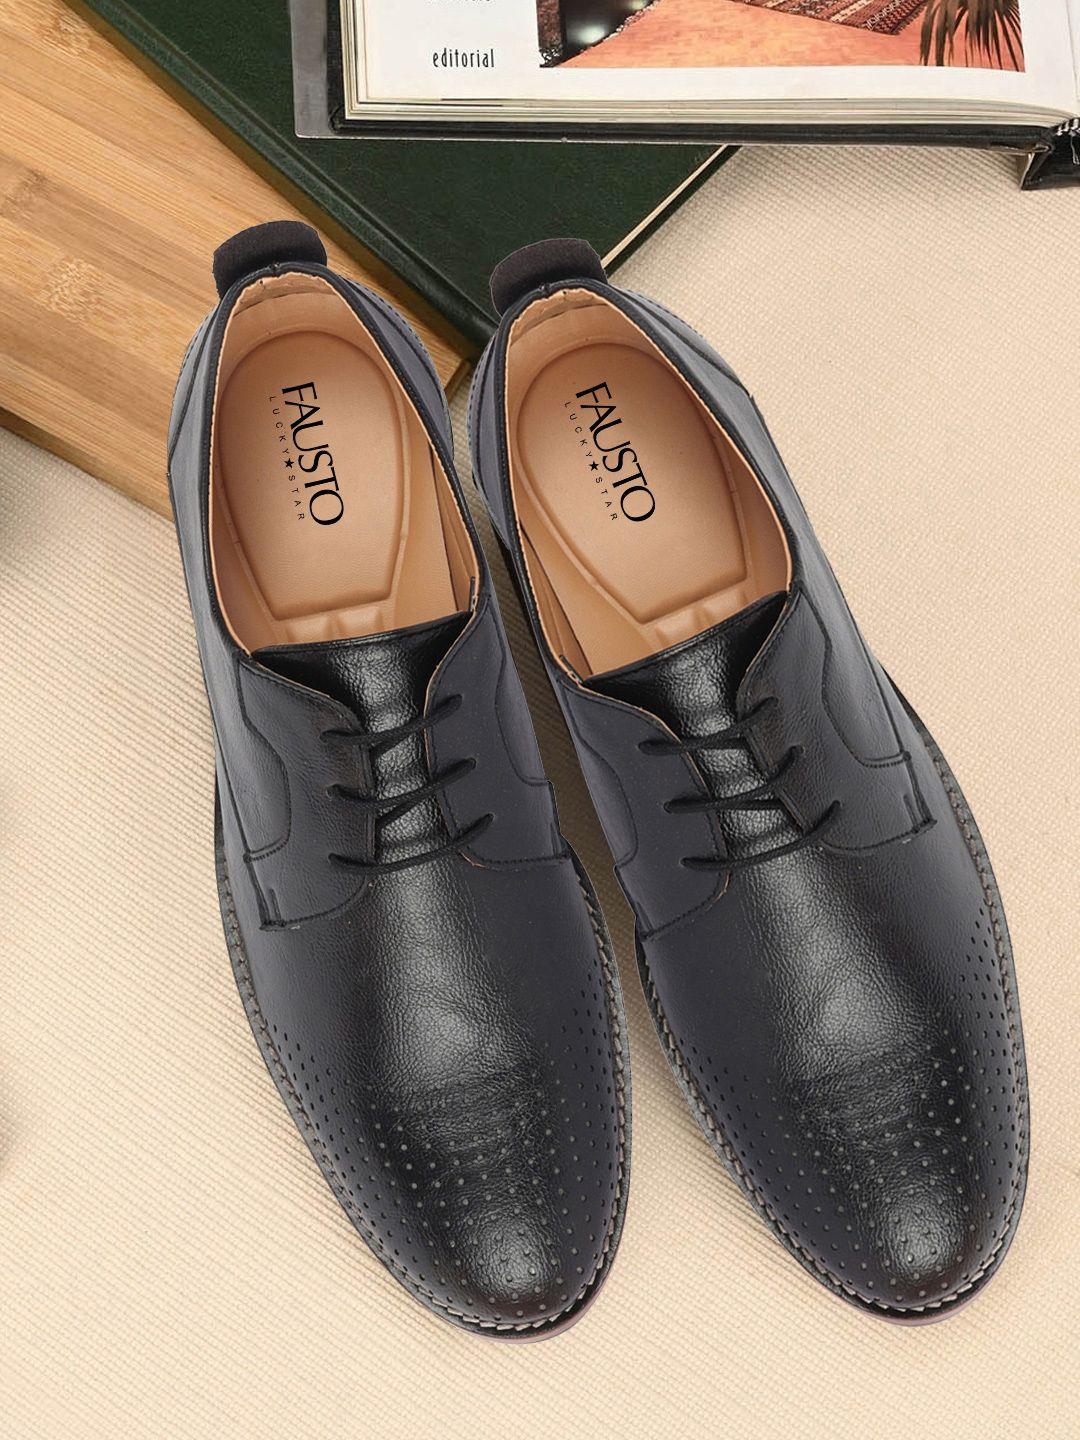 fausto-men-black-solid-formal-derby-shoes